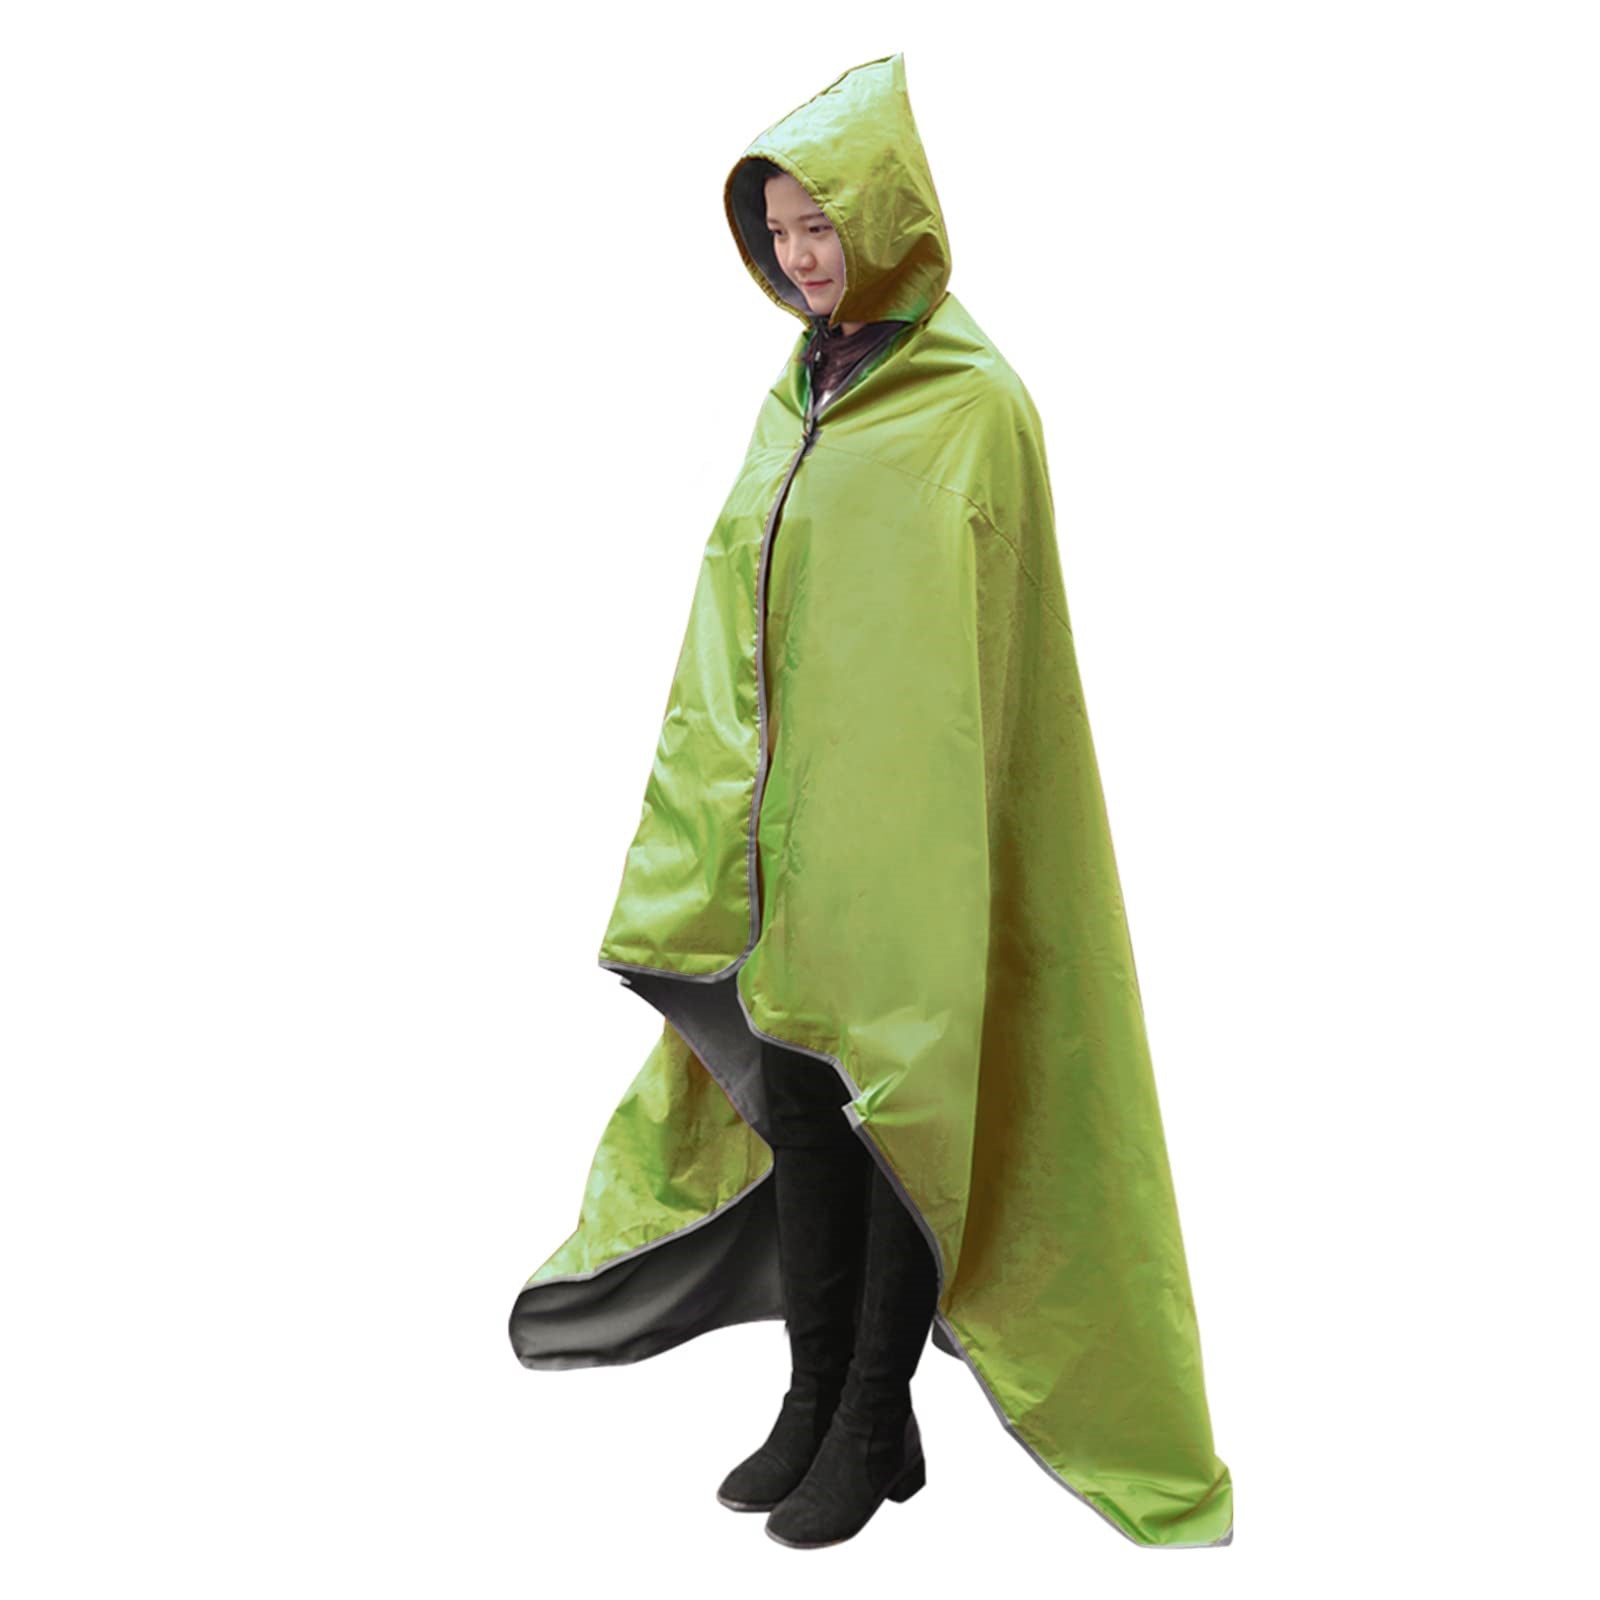 Fancywing Outdoor Waterproof Windproof Stadium Large Size Fleece Blanket Green with Hood (79 x 56 inches)